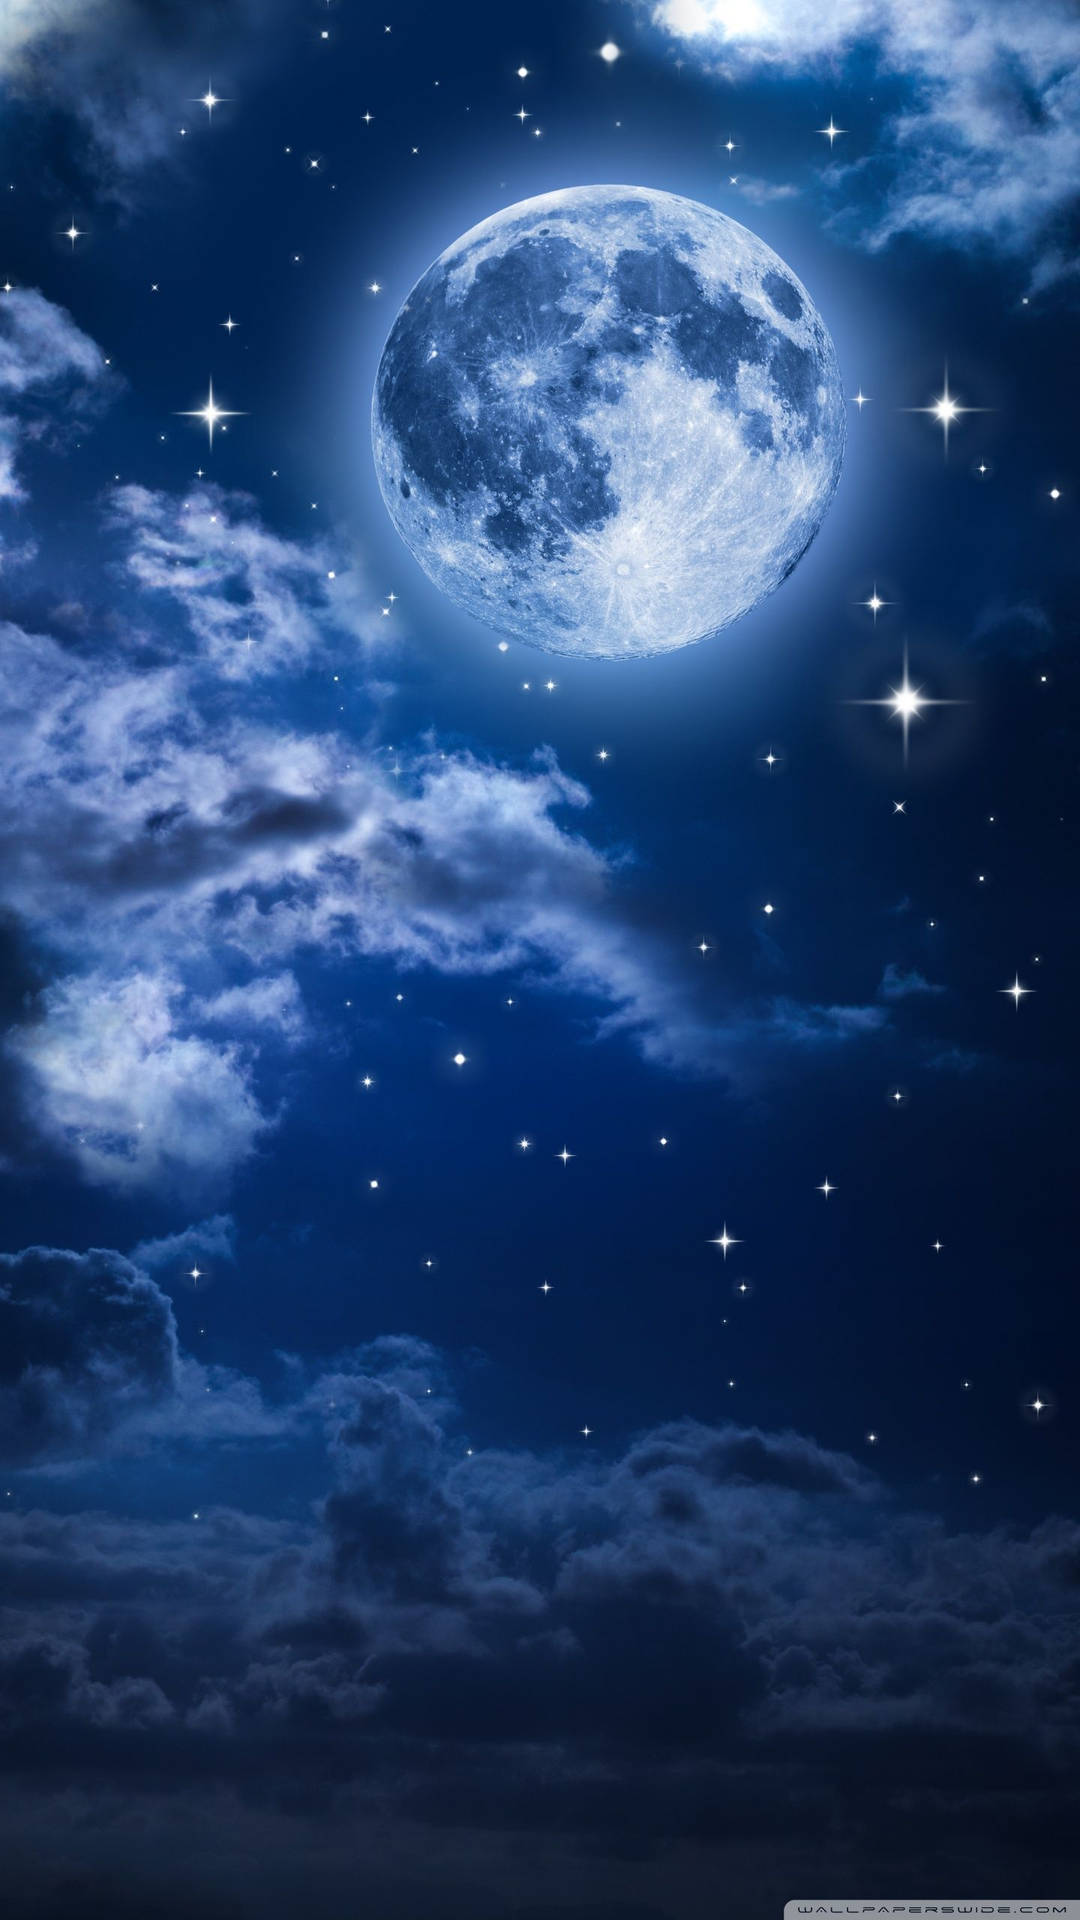 HD wallpaper anime Moon street light night sky stars digital art  artwork  Wallpaper Flare